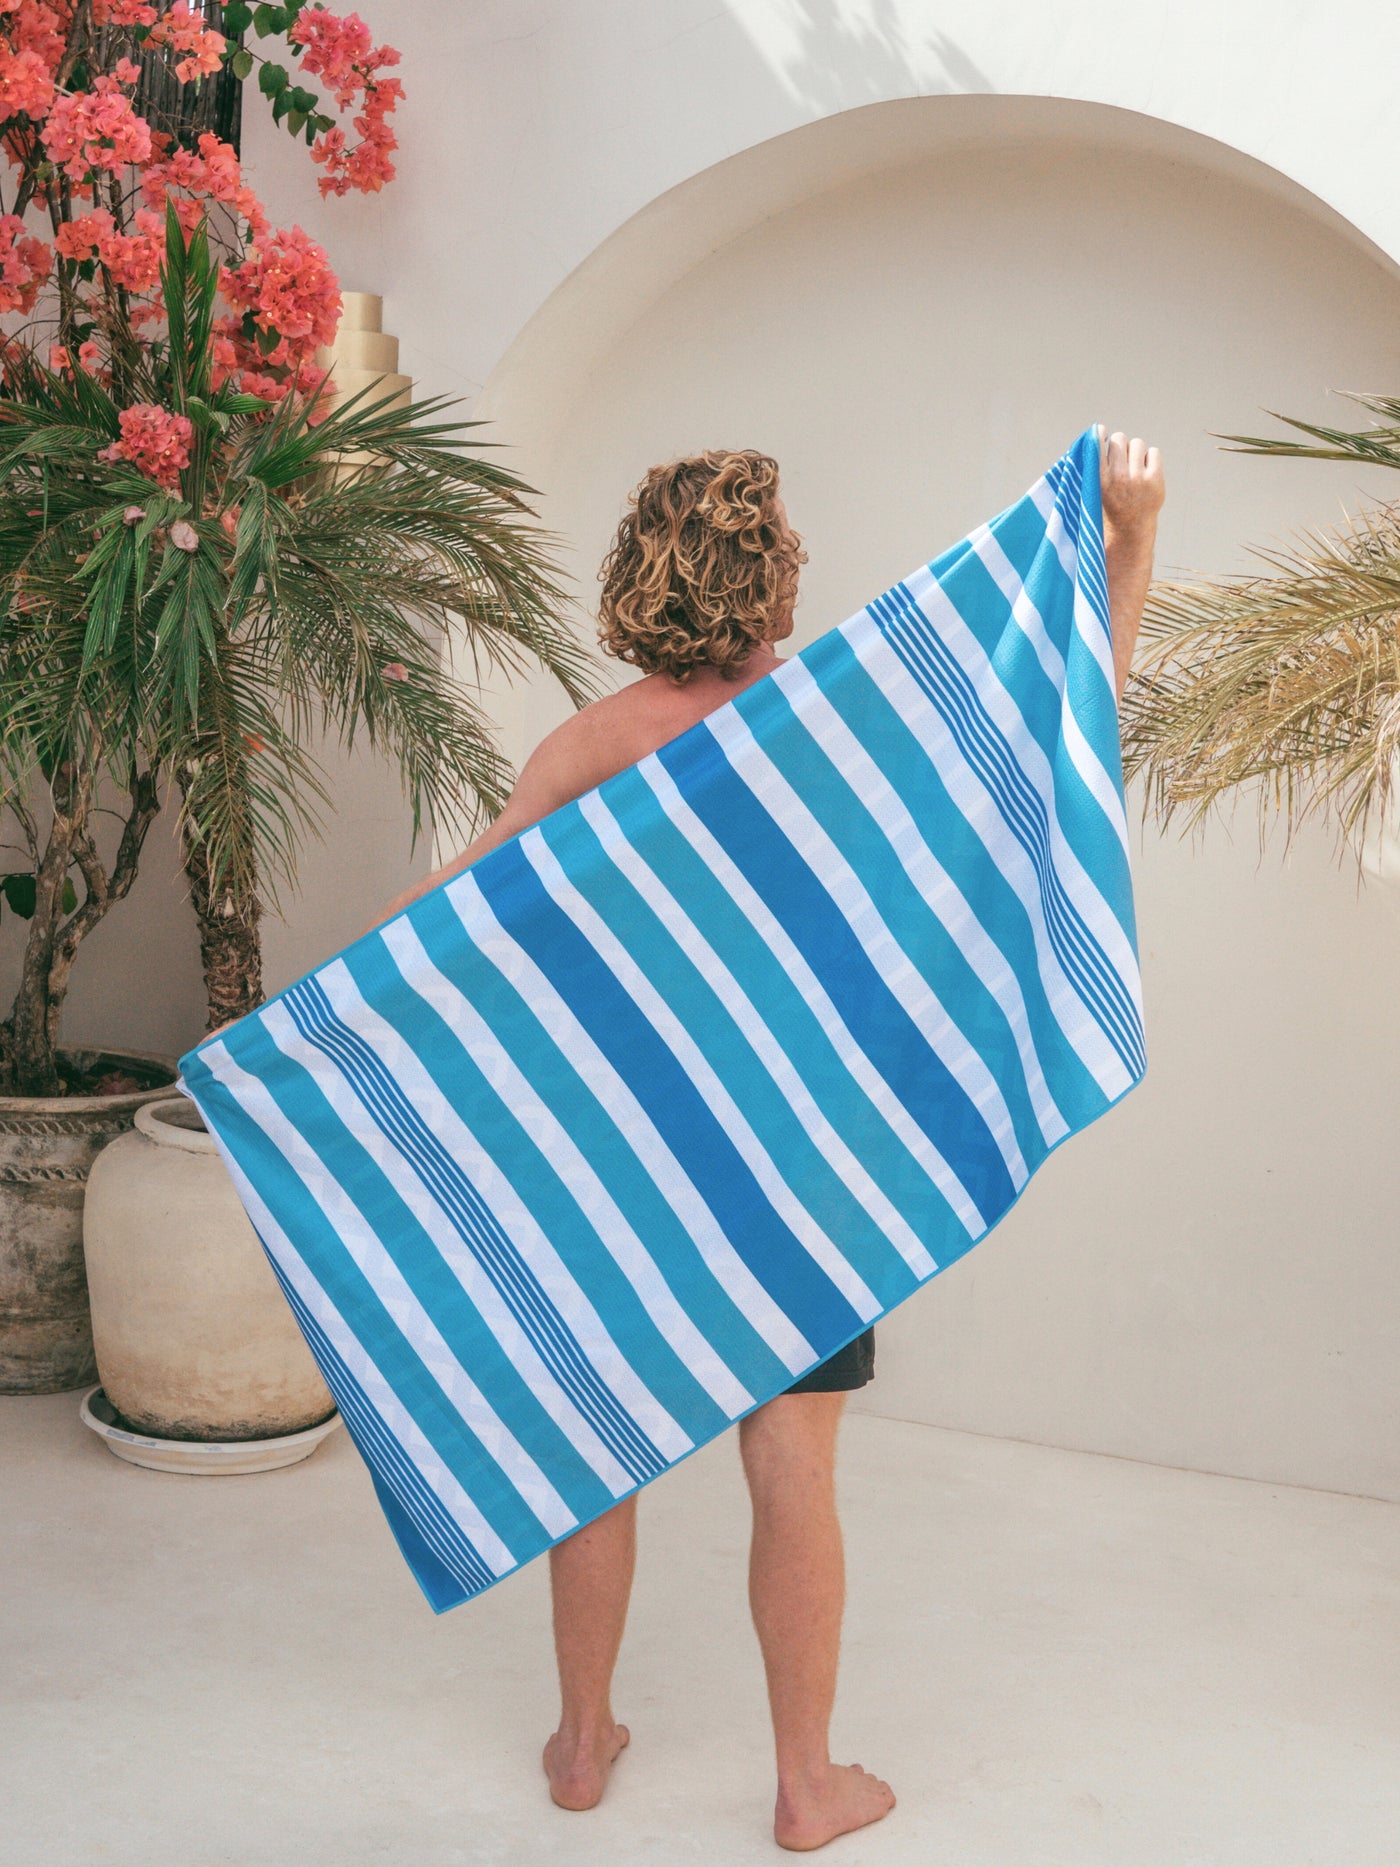 Hamptons Stripes - Sand Free Beach Towel